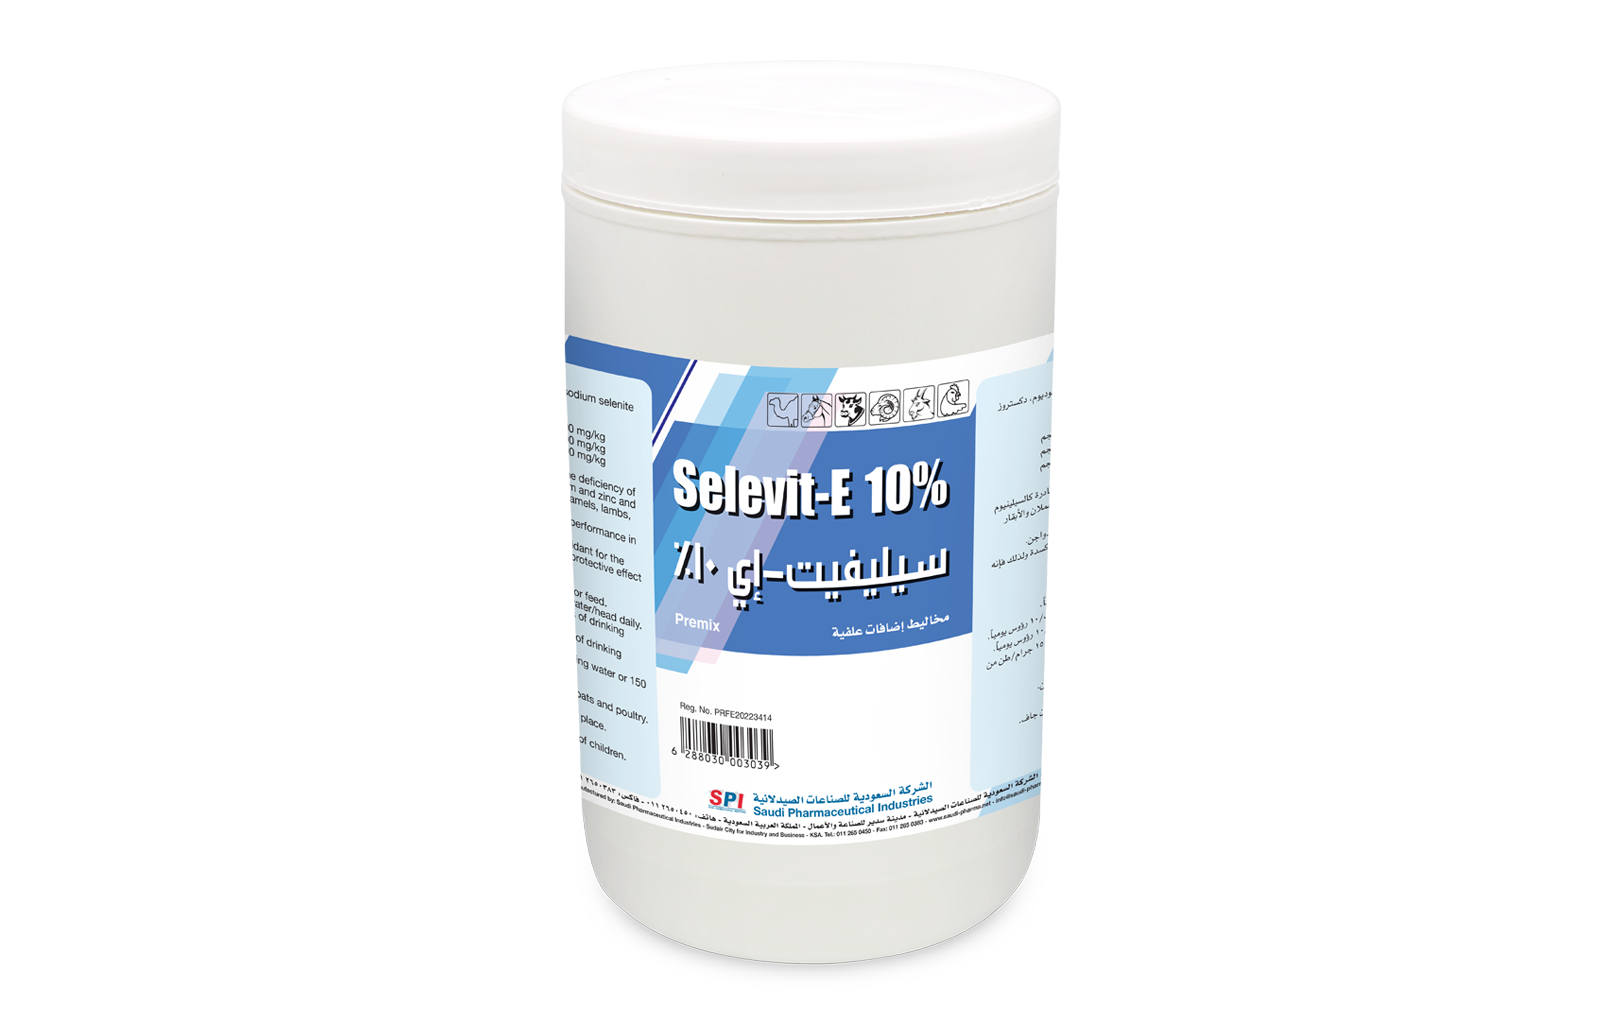 Selevit-E 10% Powder (500 g)